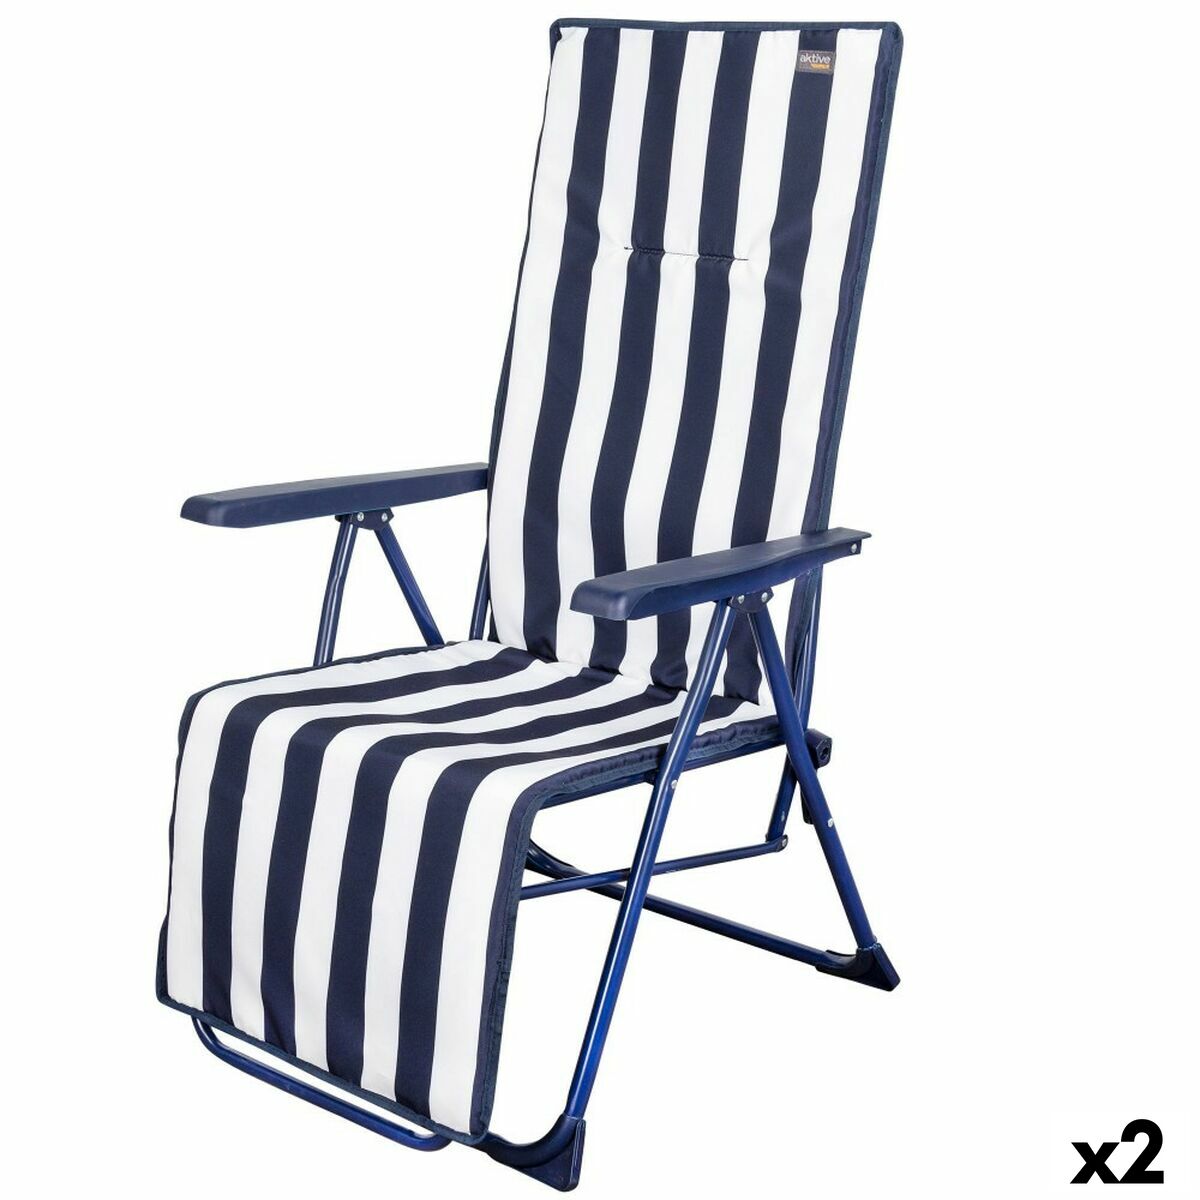 Chaise longue Aktive Blanc Blue marine Inclinable A rayures 147 x 70 x 48 cm (2 Unités)